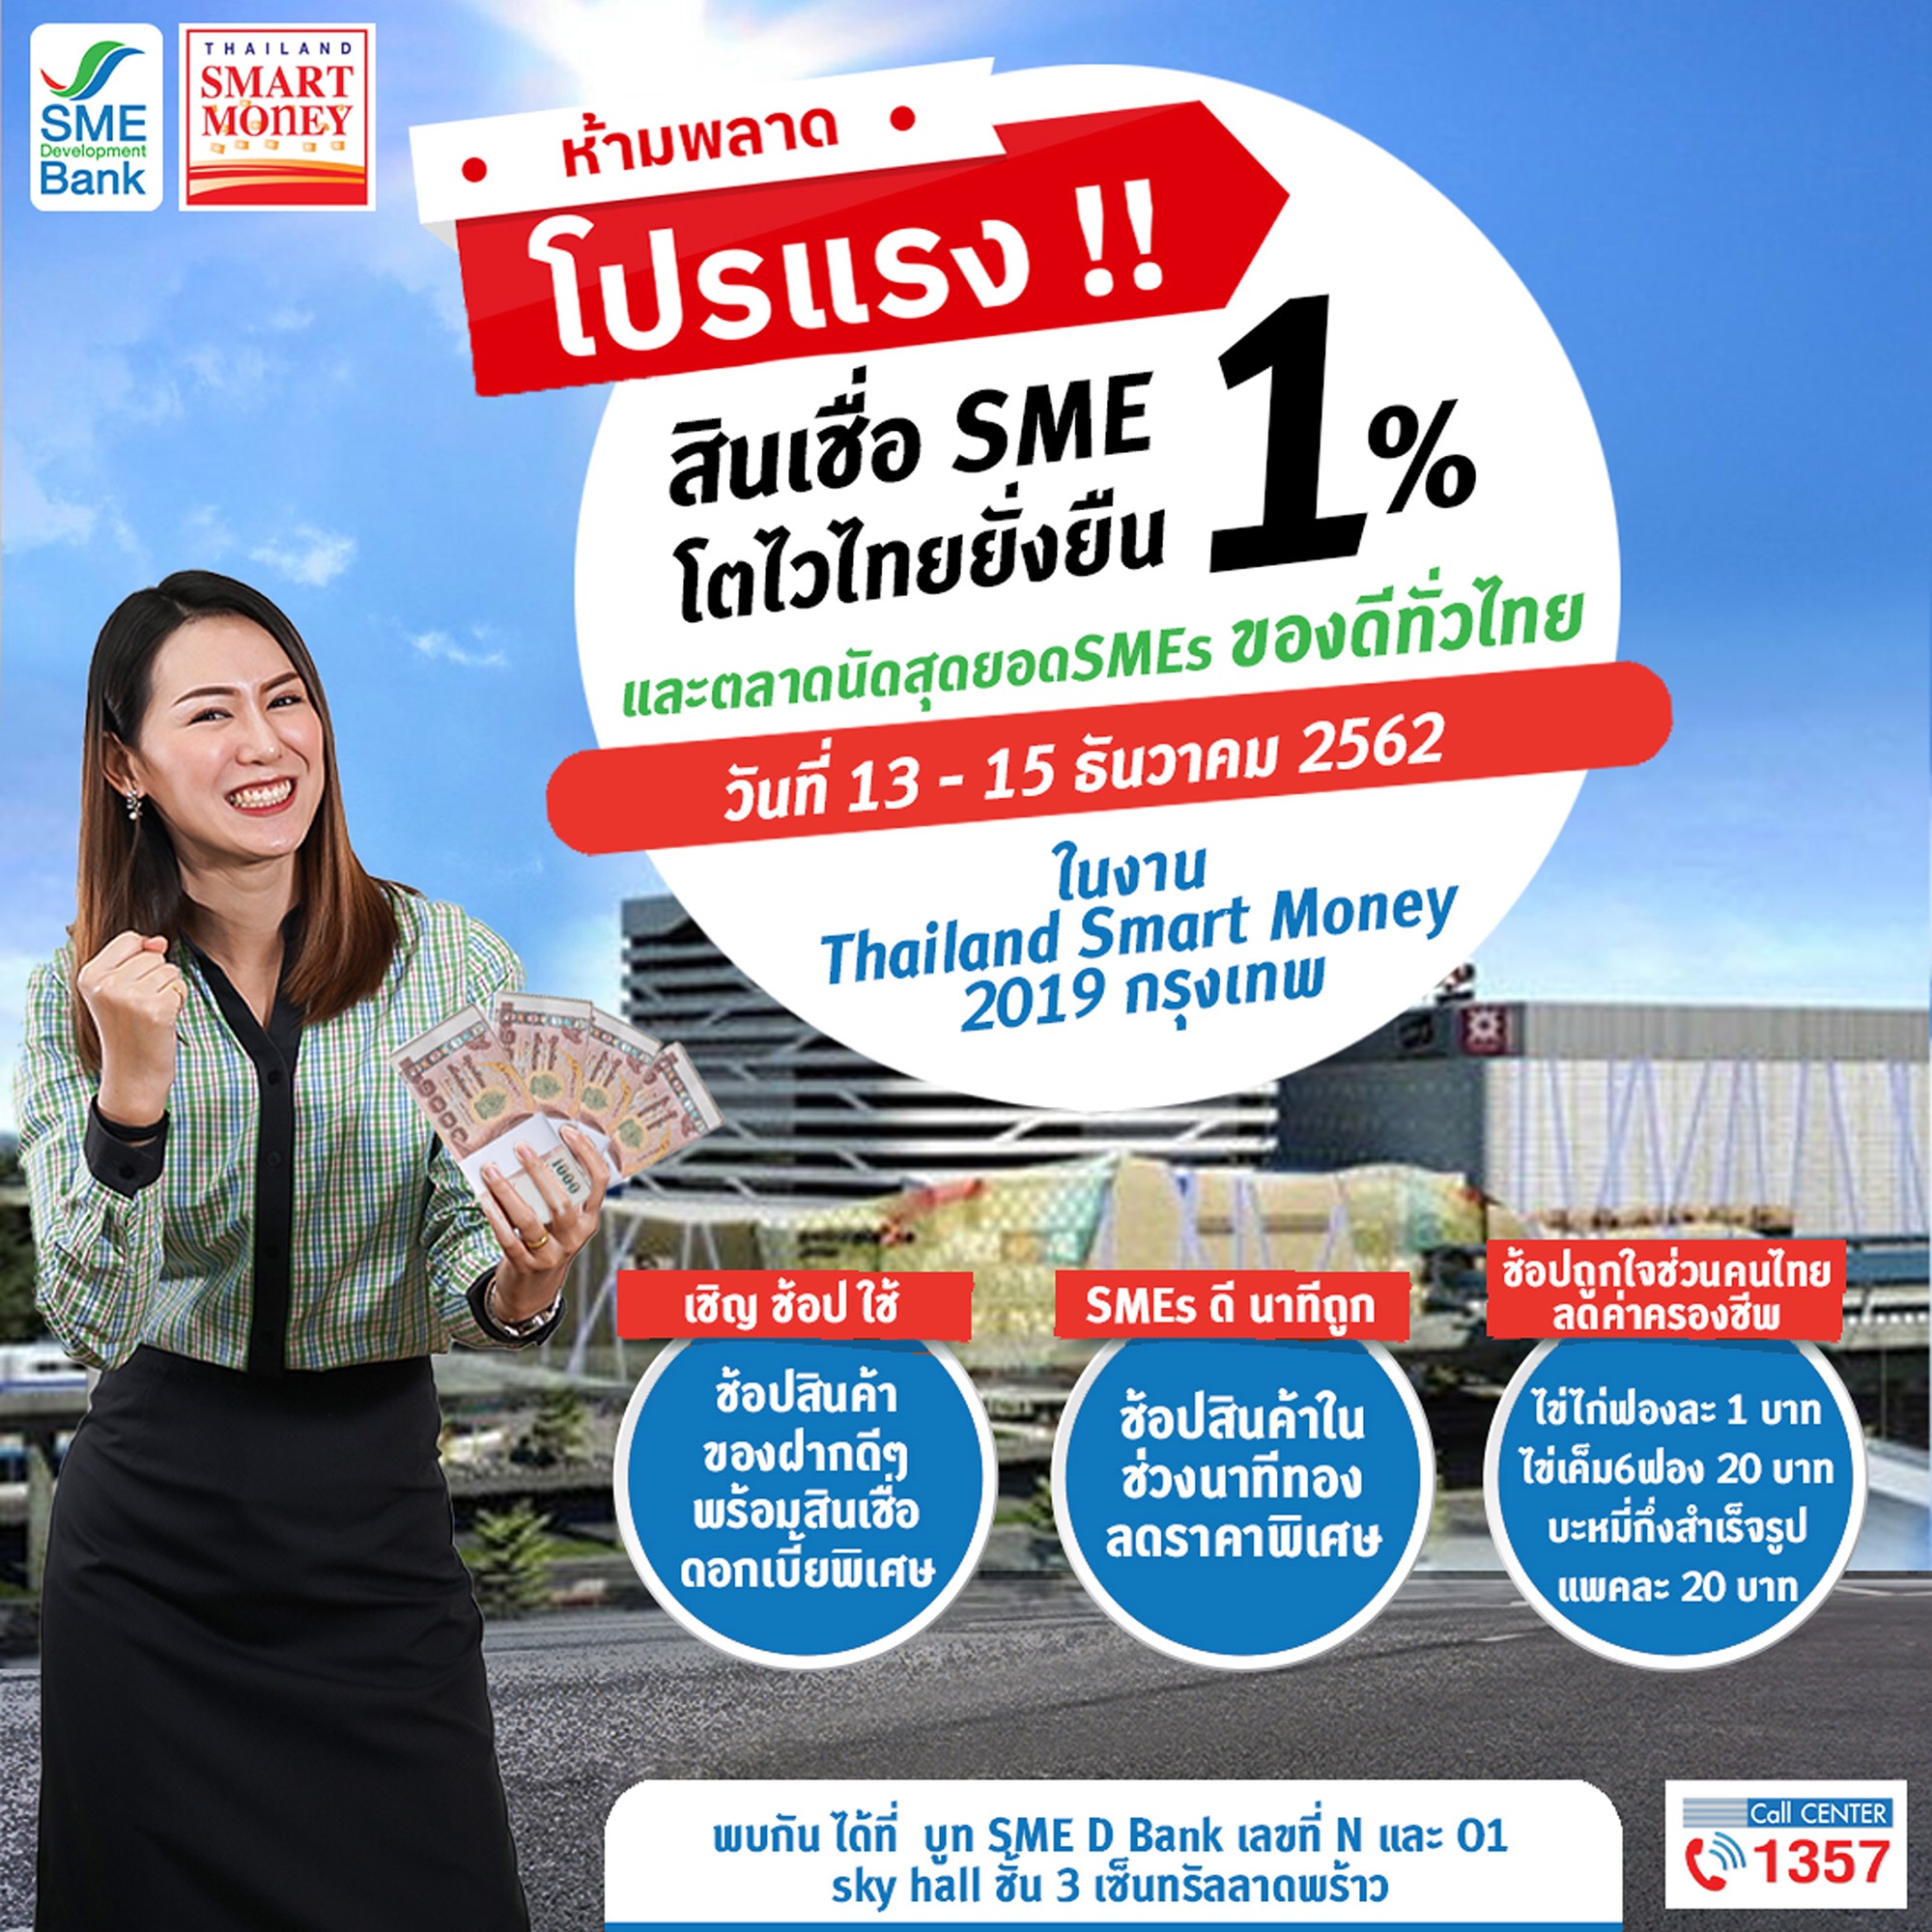 SME D Bank ระดมของดีทั่วไทยในงาน “Thailand Smart Money 2019 กรุงเทพ”